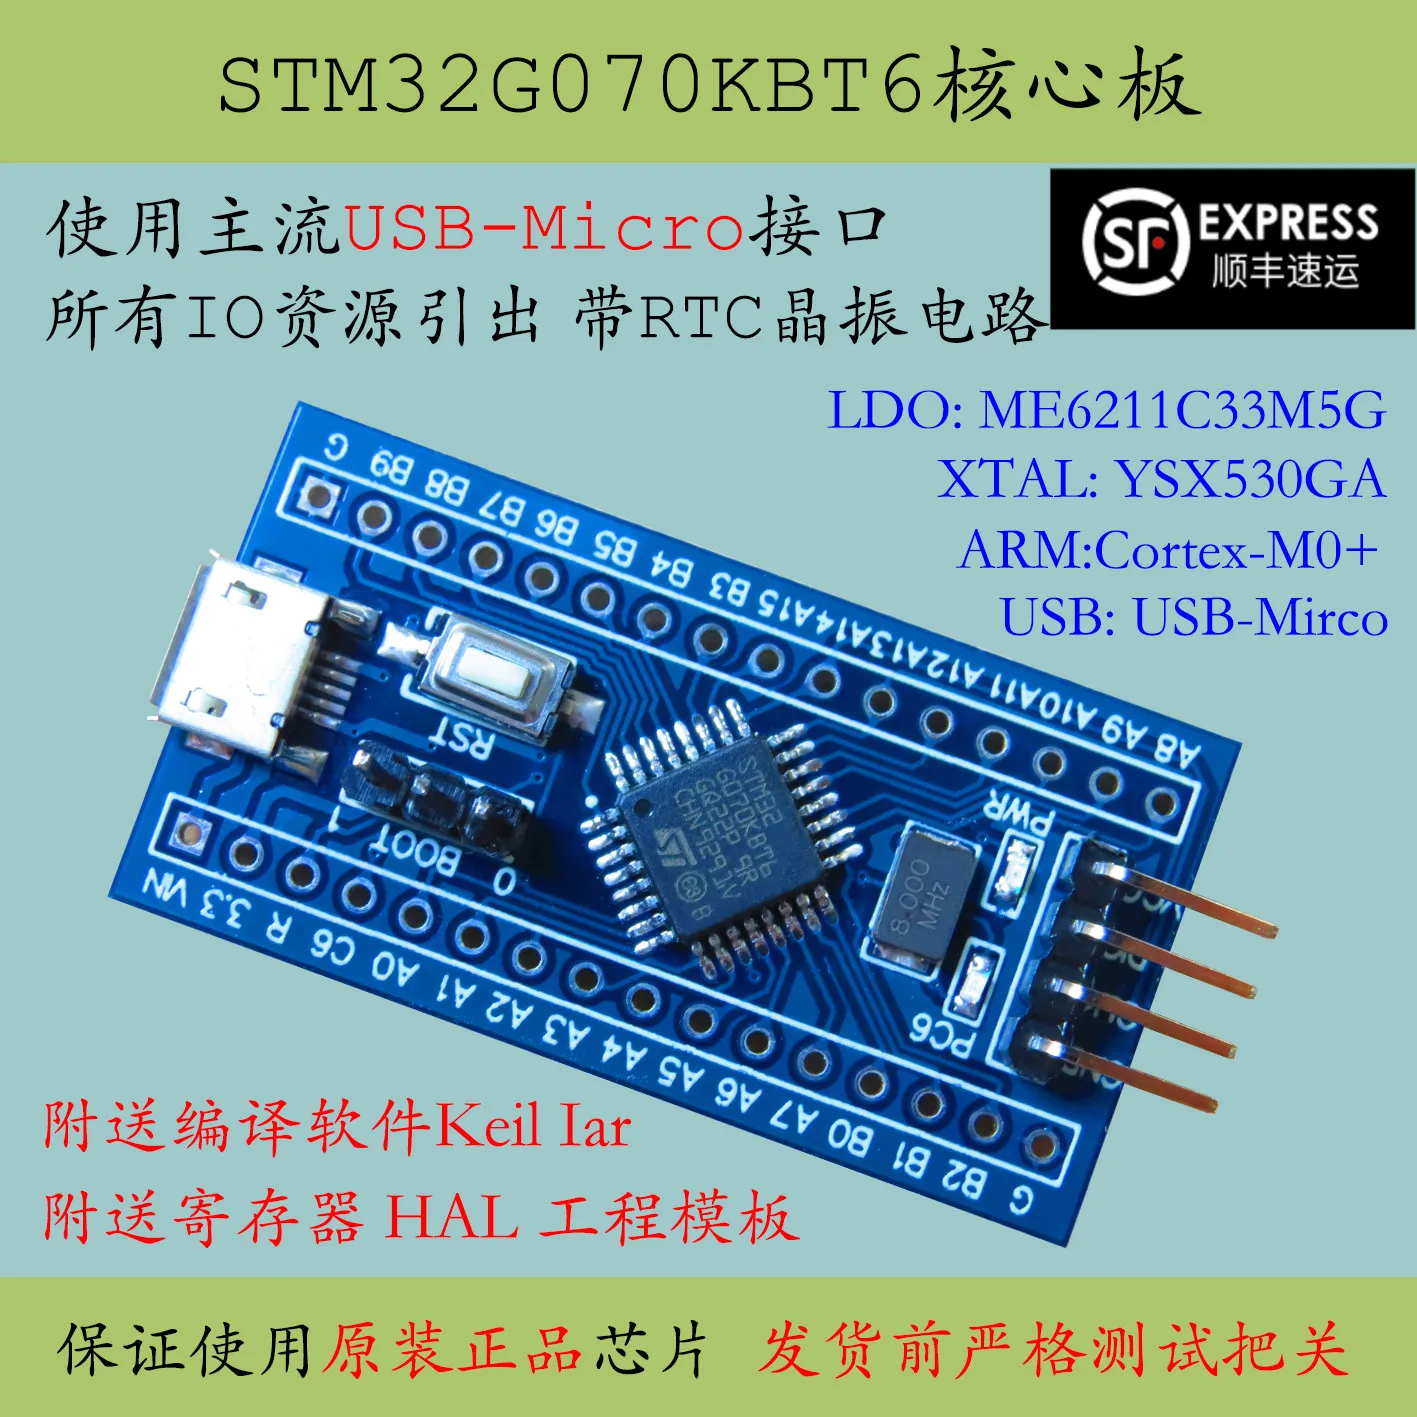 

Stm32g070 core board stm32g070kbt6 minimum system Cortex-M0 + new product G0 development board